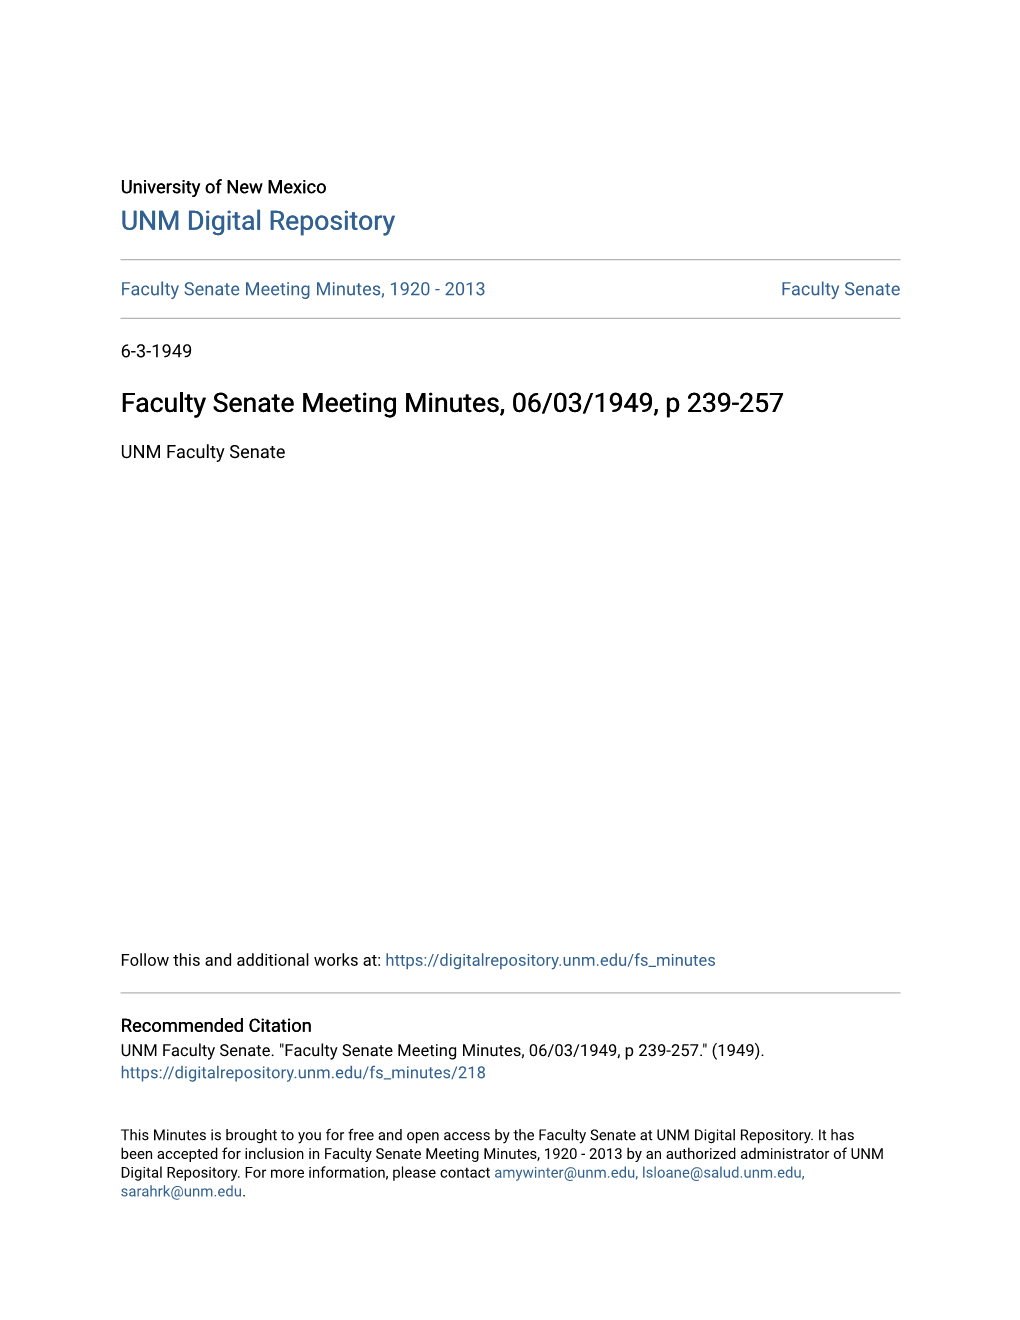 Faculty Senate Meeting Minutes, 06/03/1949, P 239-257